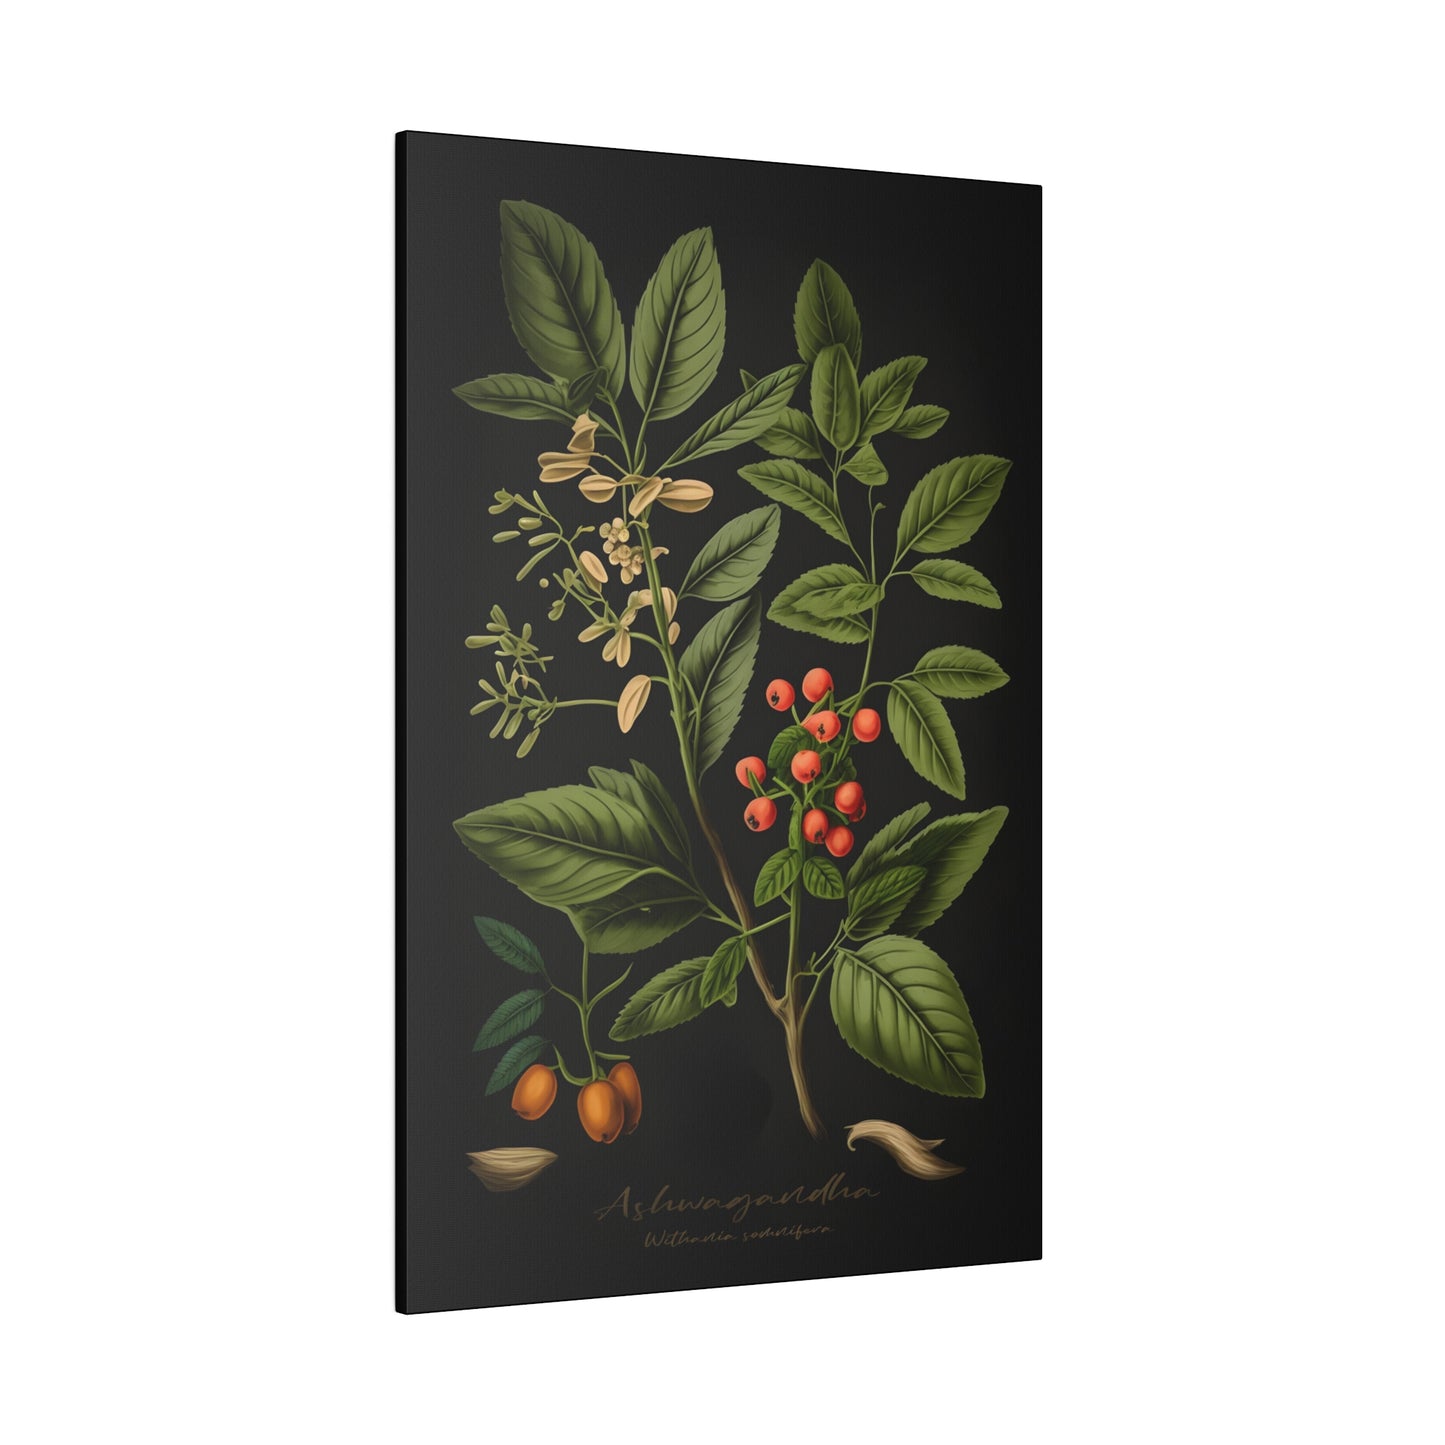 Dark Ashwagandha Canvas Print - Herbal Art for Home or Office - Apothecary Decor